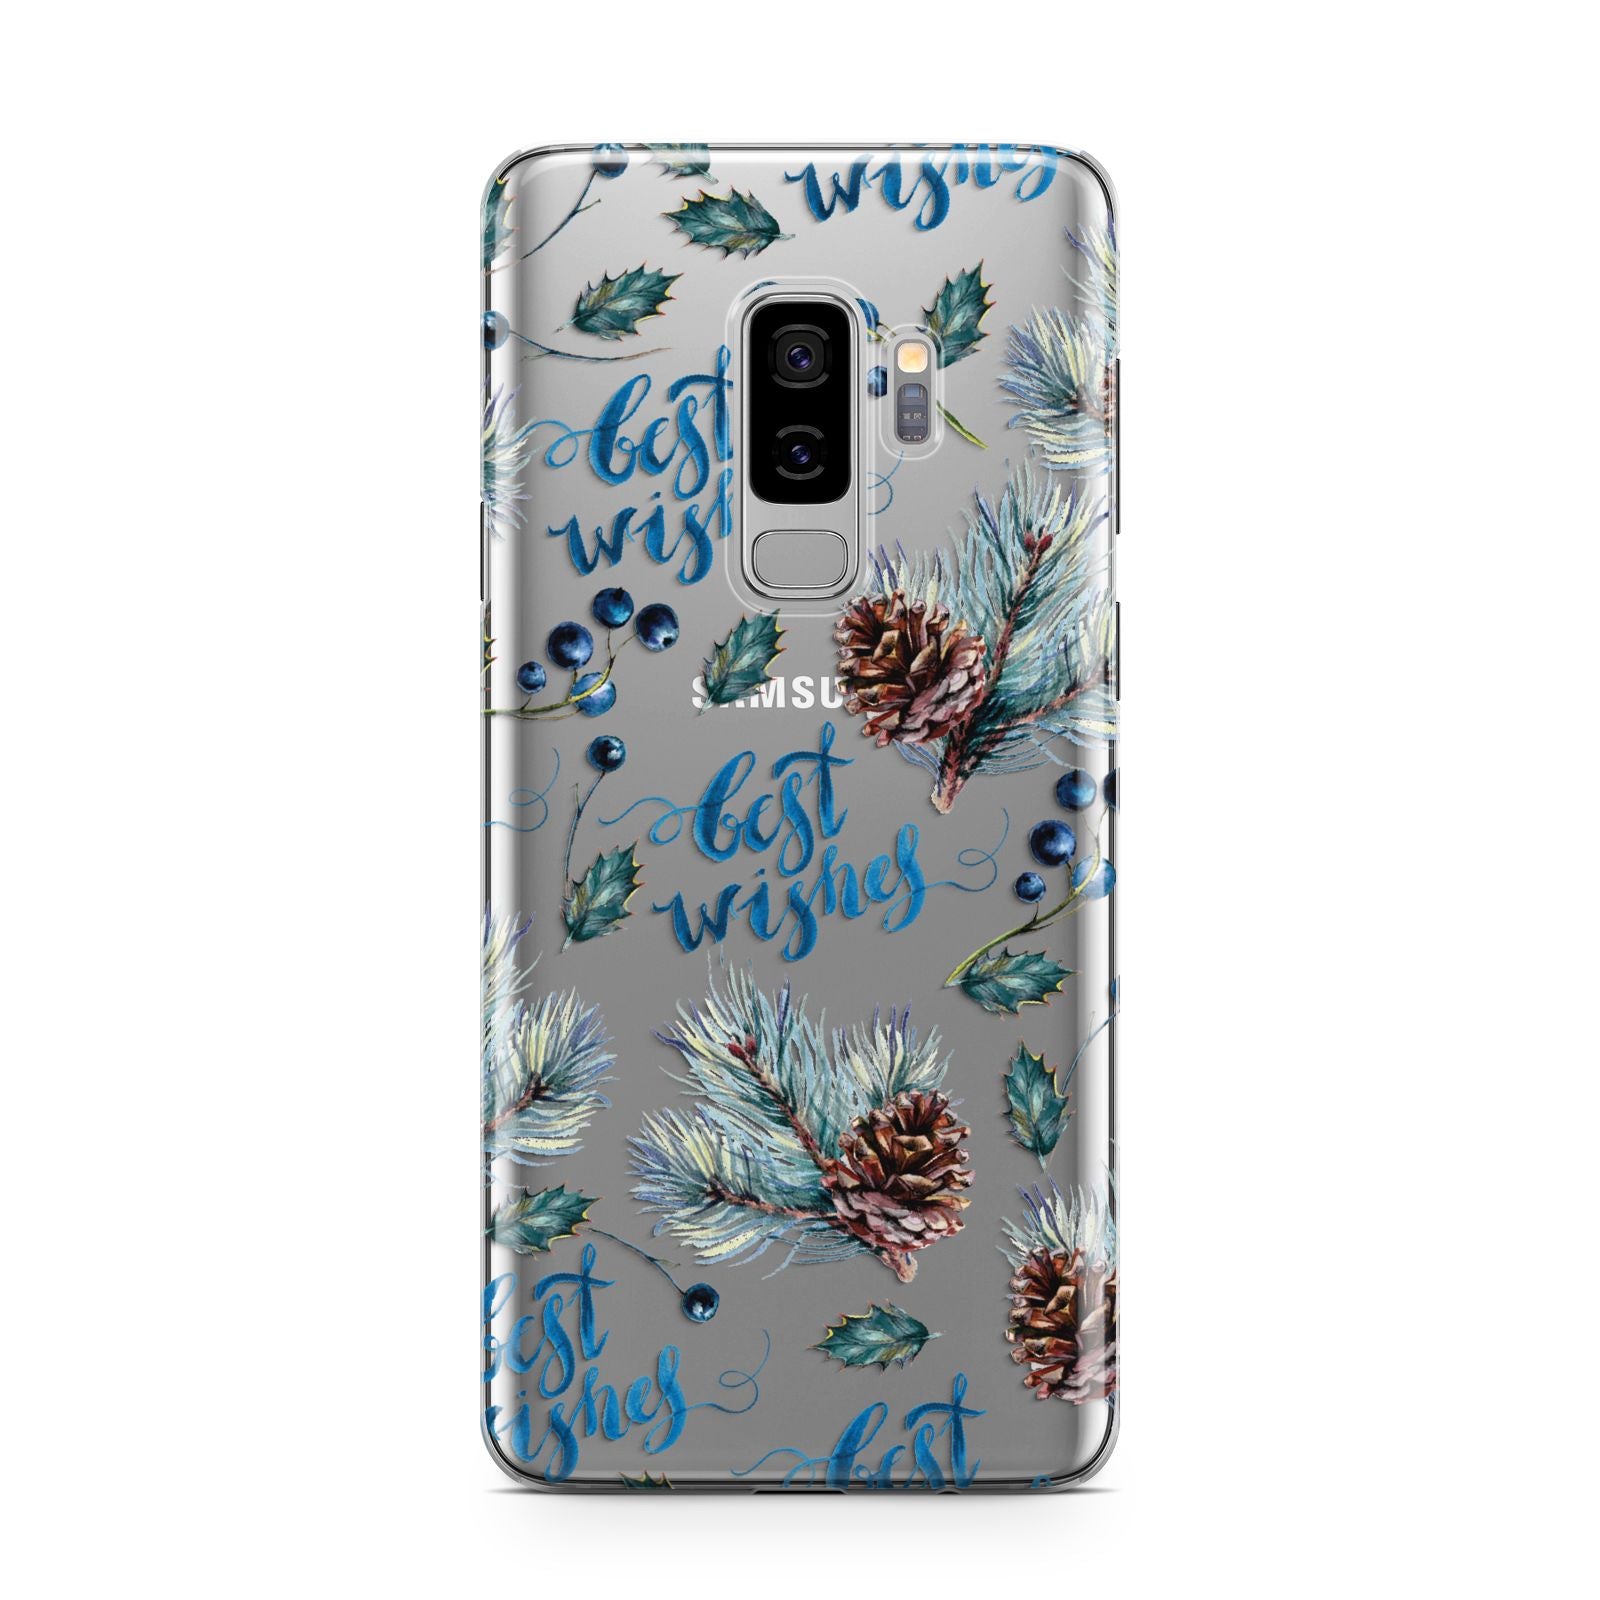 Pine cones wild berries Samsung Galaxy S9 Plus Case on Silver phone